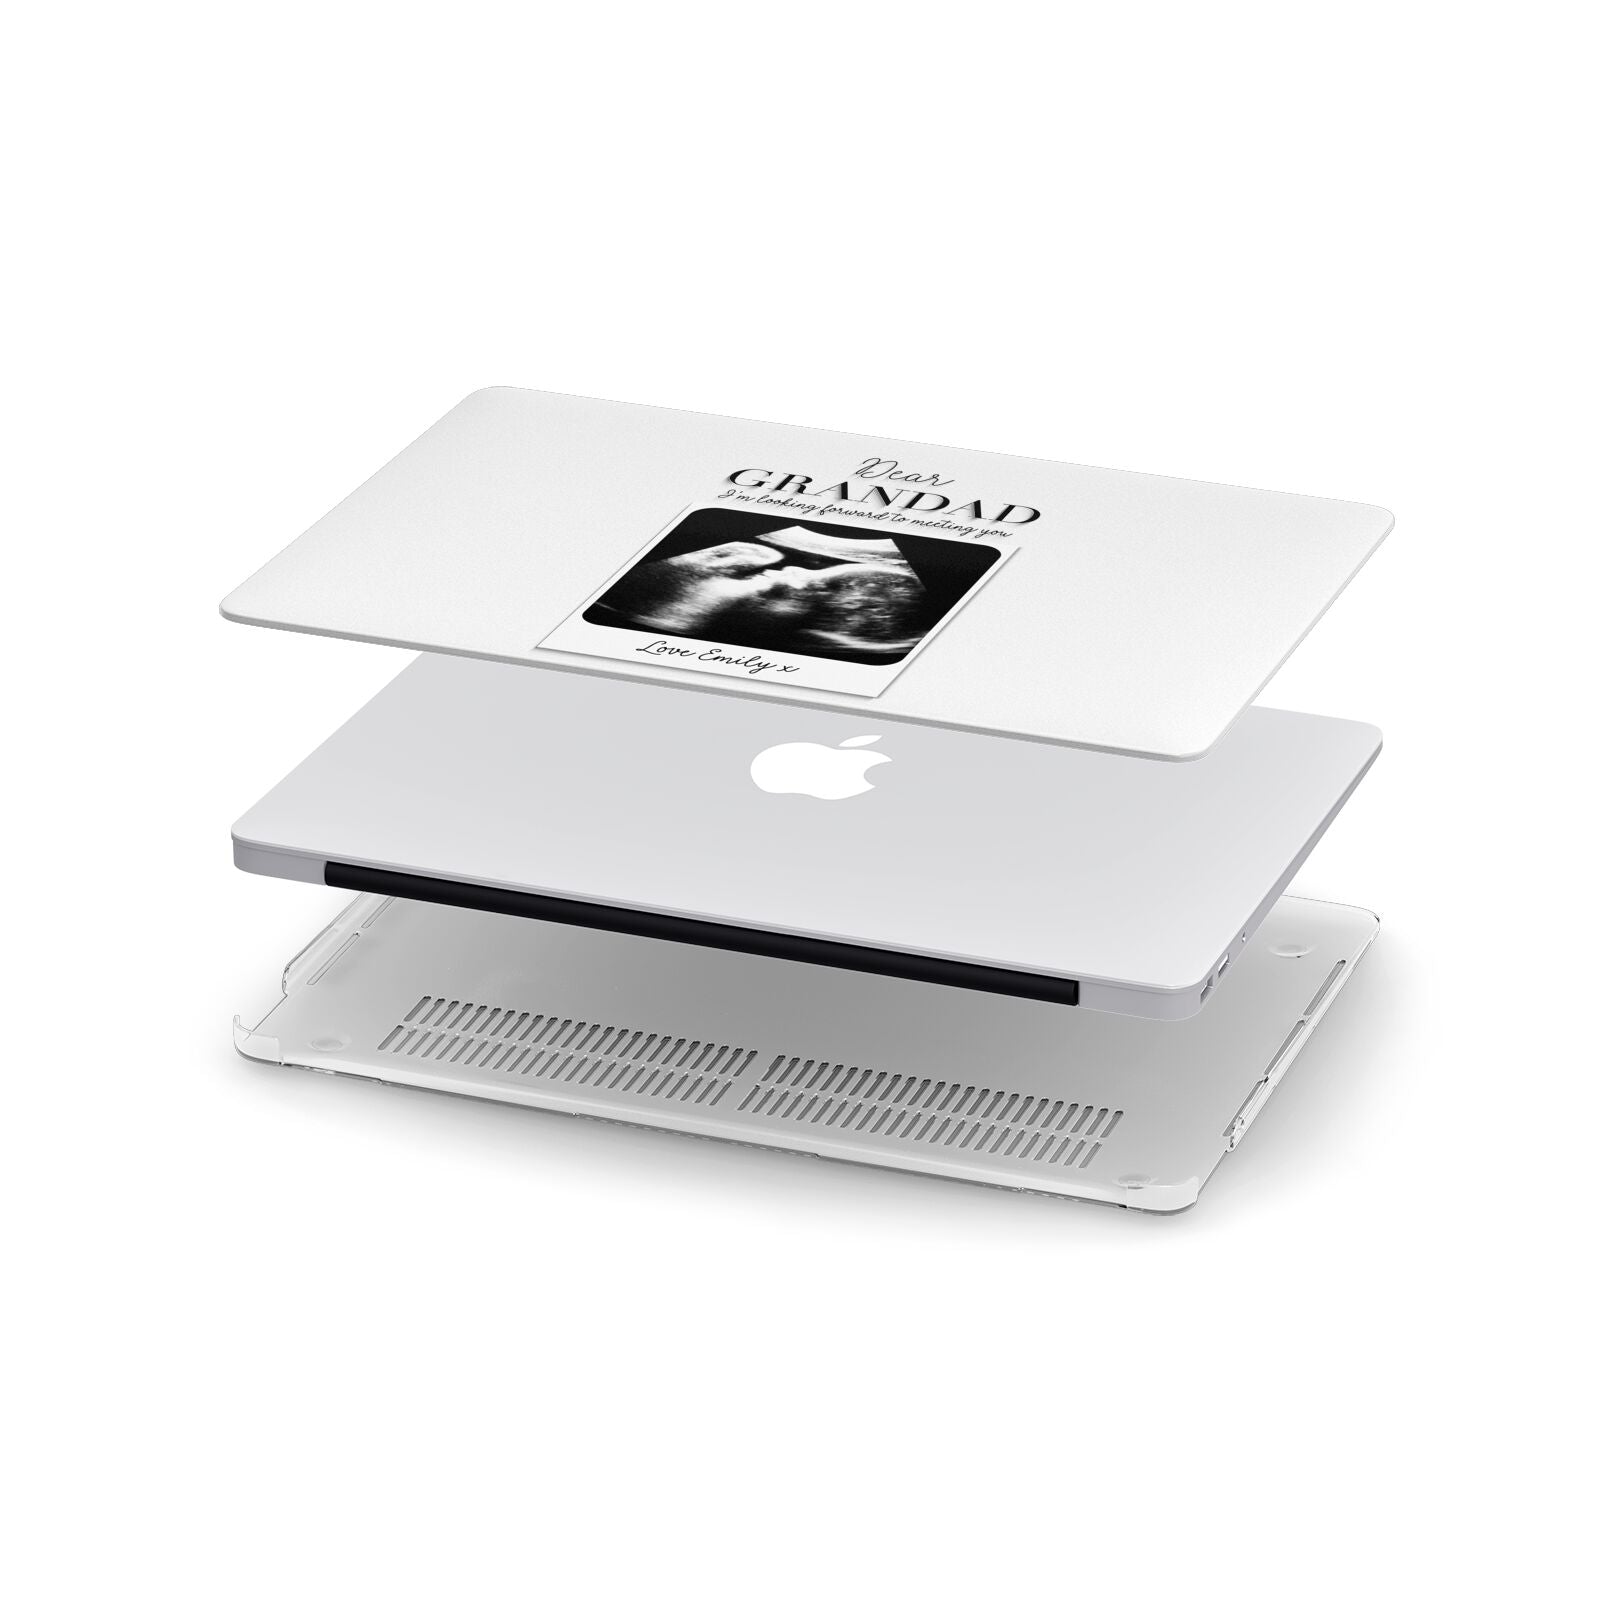 Personalised Baby Scan Photo Upload Apple MacBook Case in Detail